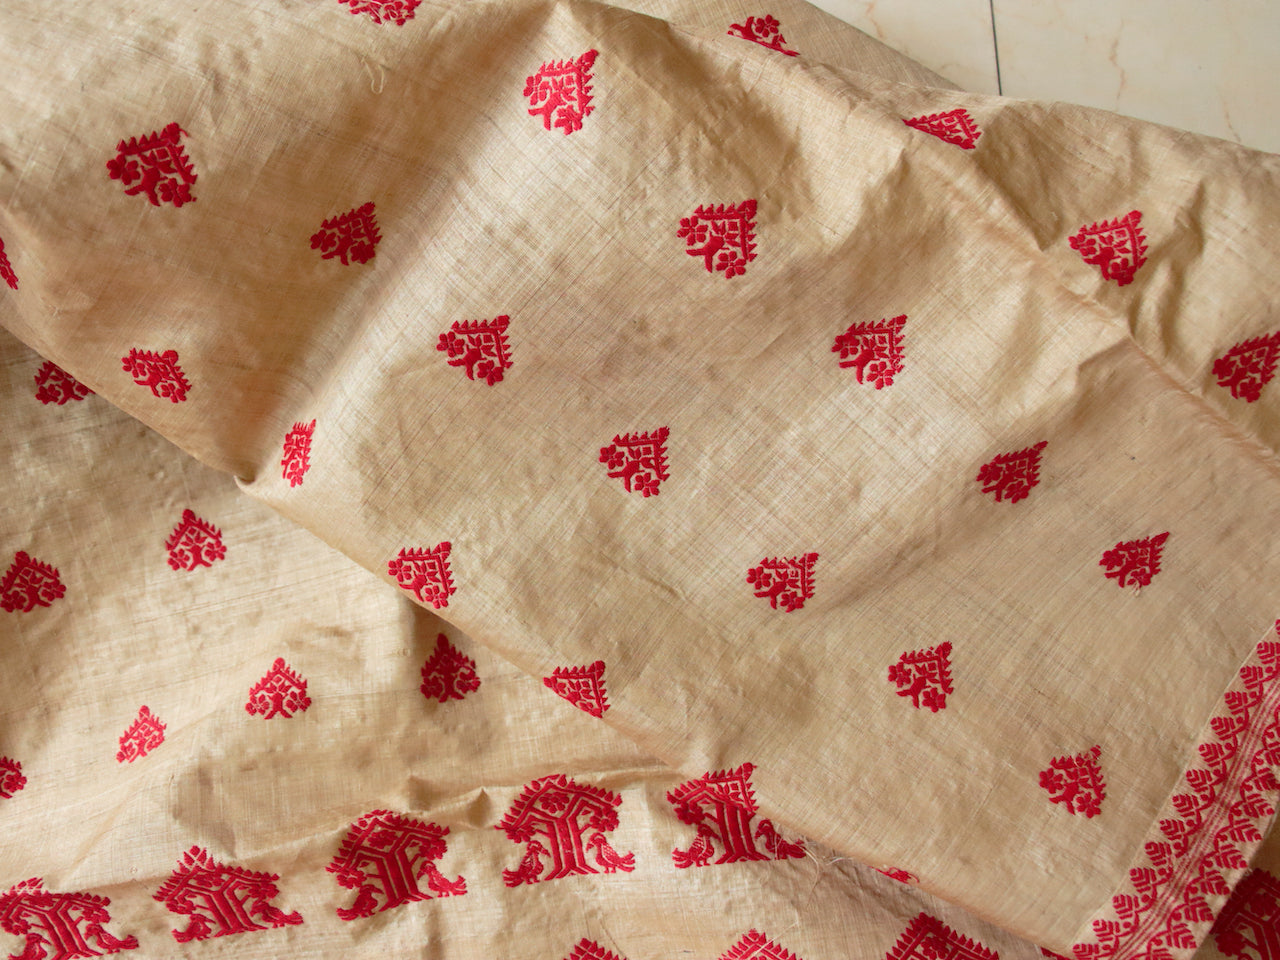 Muga Silk Handloom Mekhla Chador Set from Assam in Classic Red and Muga Combination